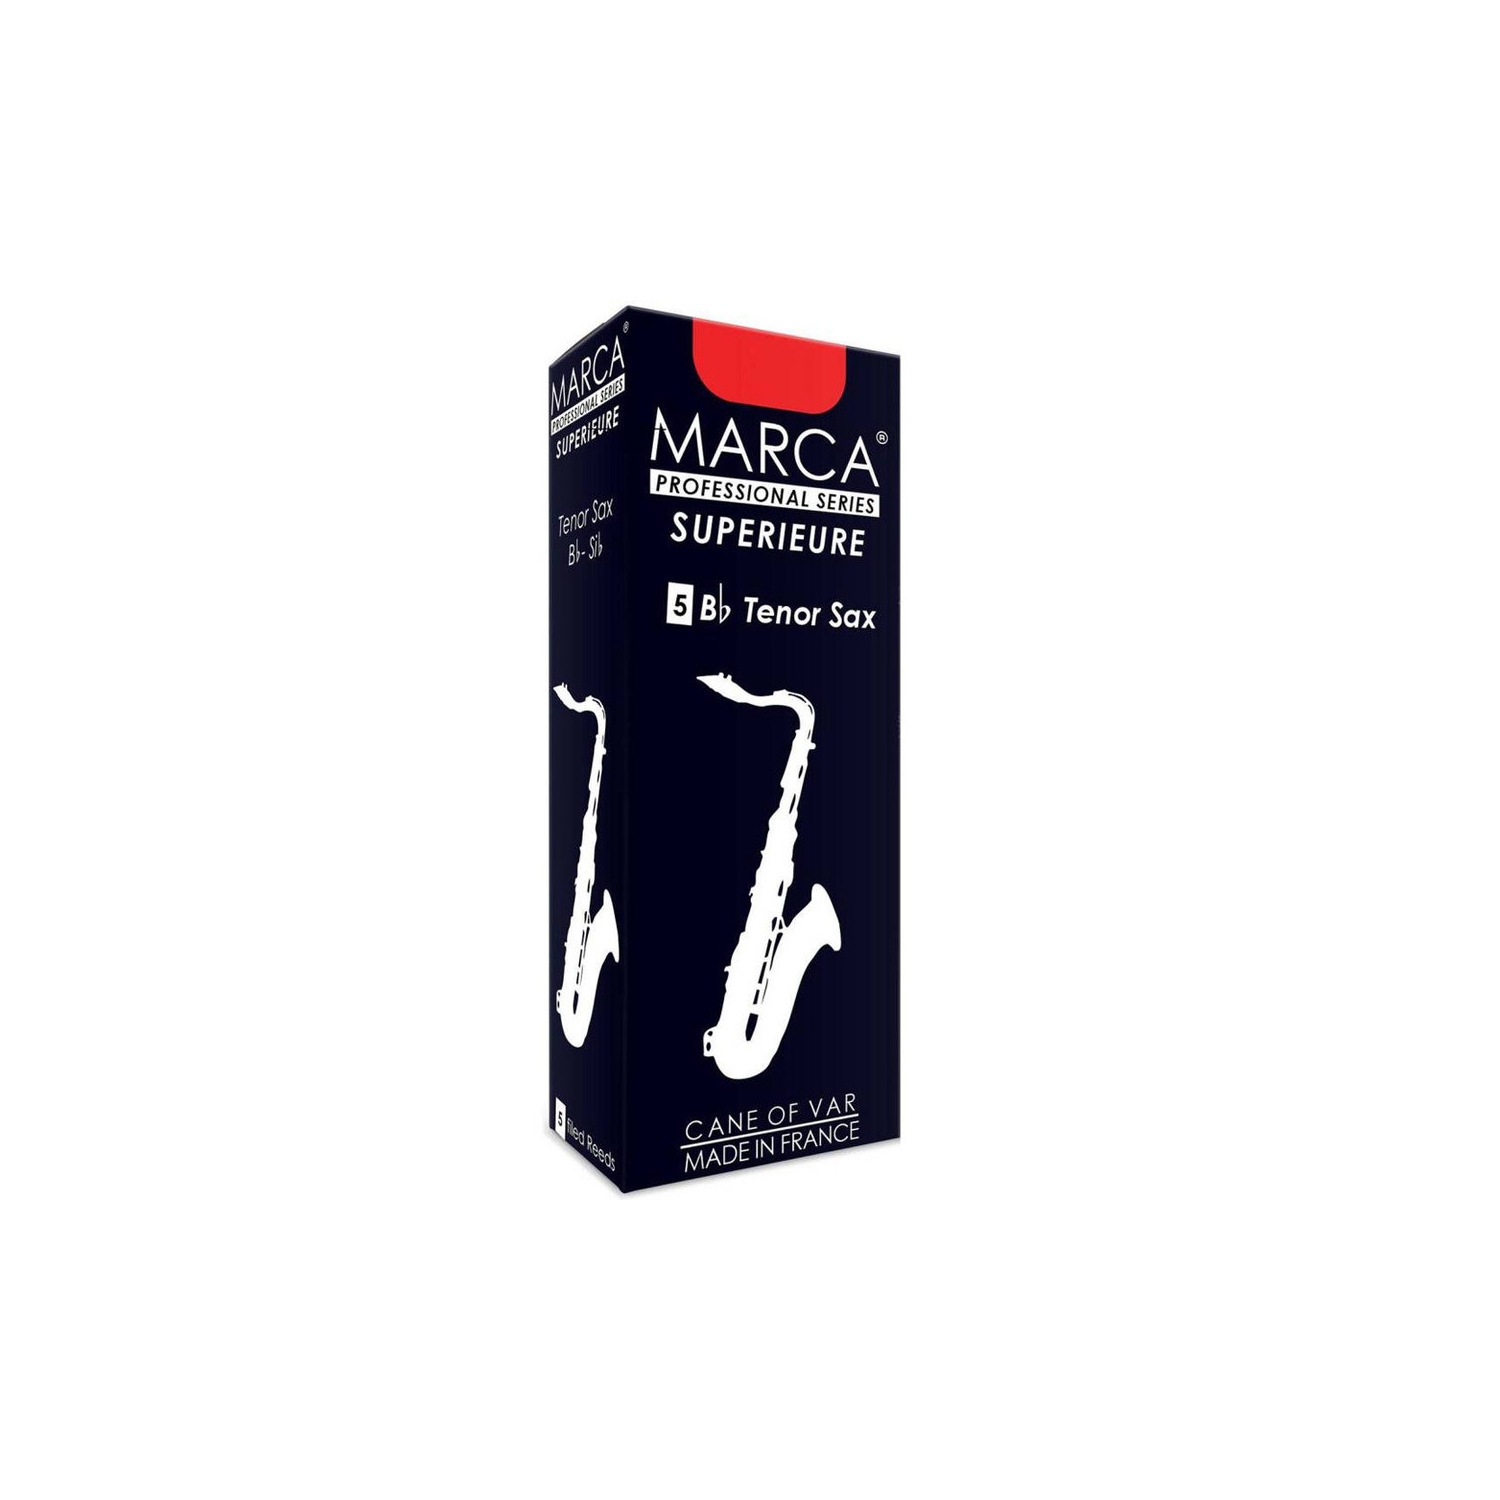 Marca Superieure Tenor Saxophone Reeds - #2.5, 5 Box